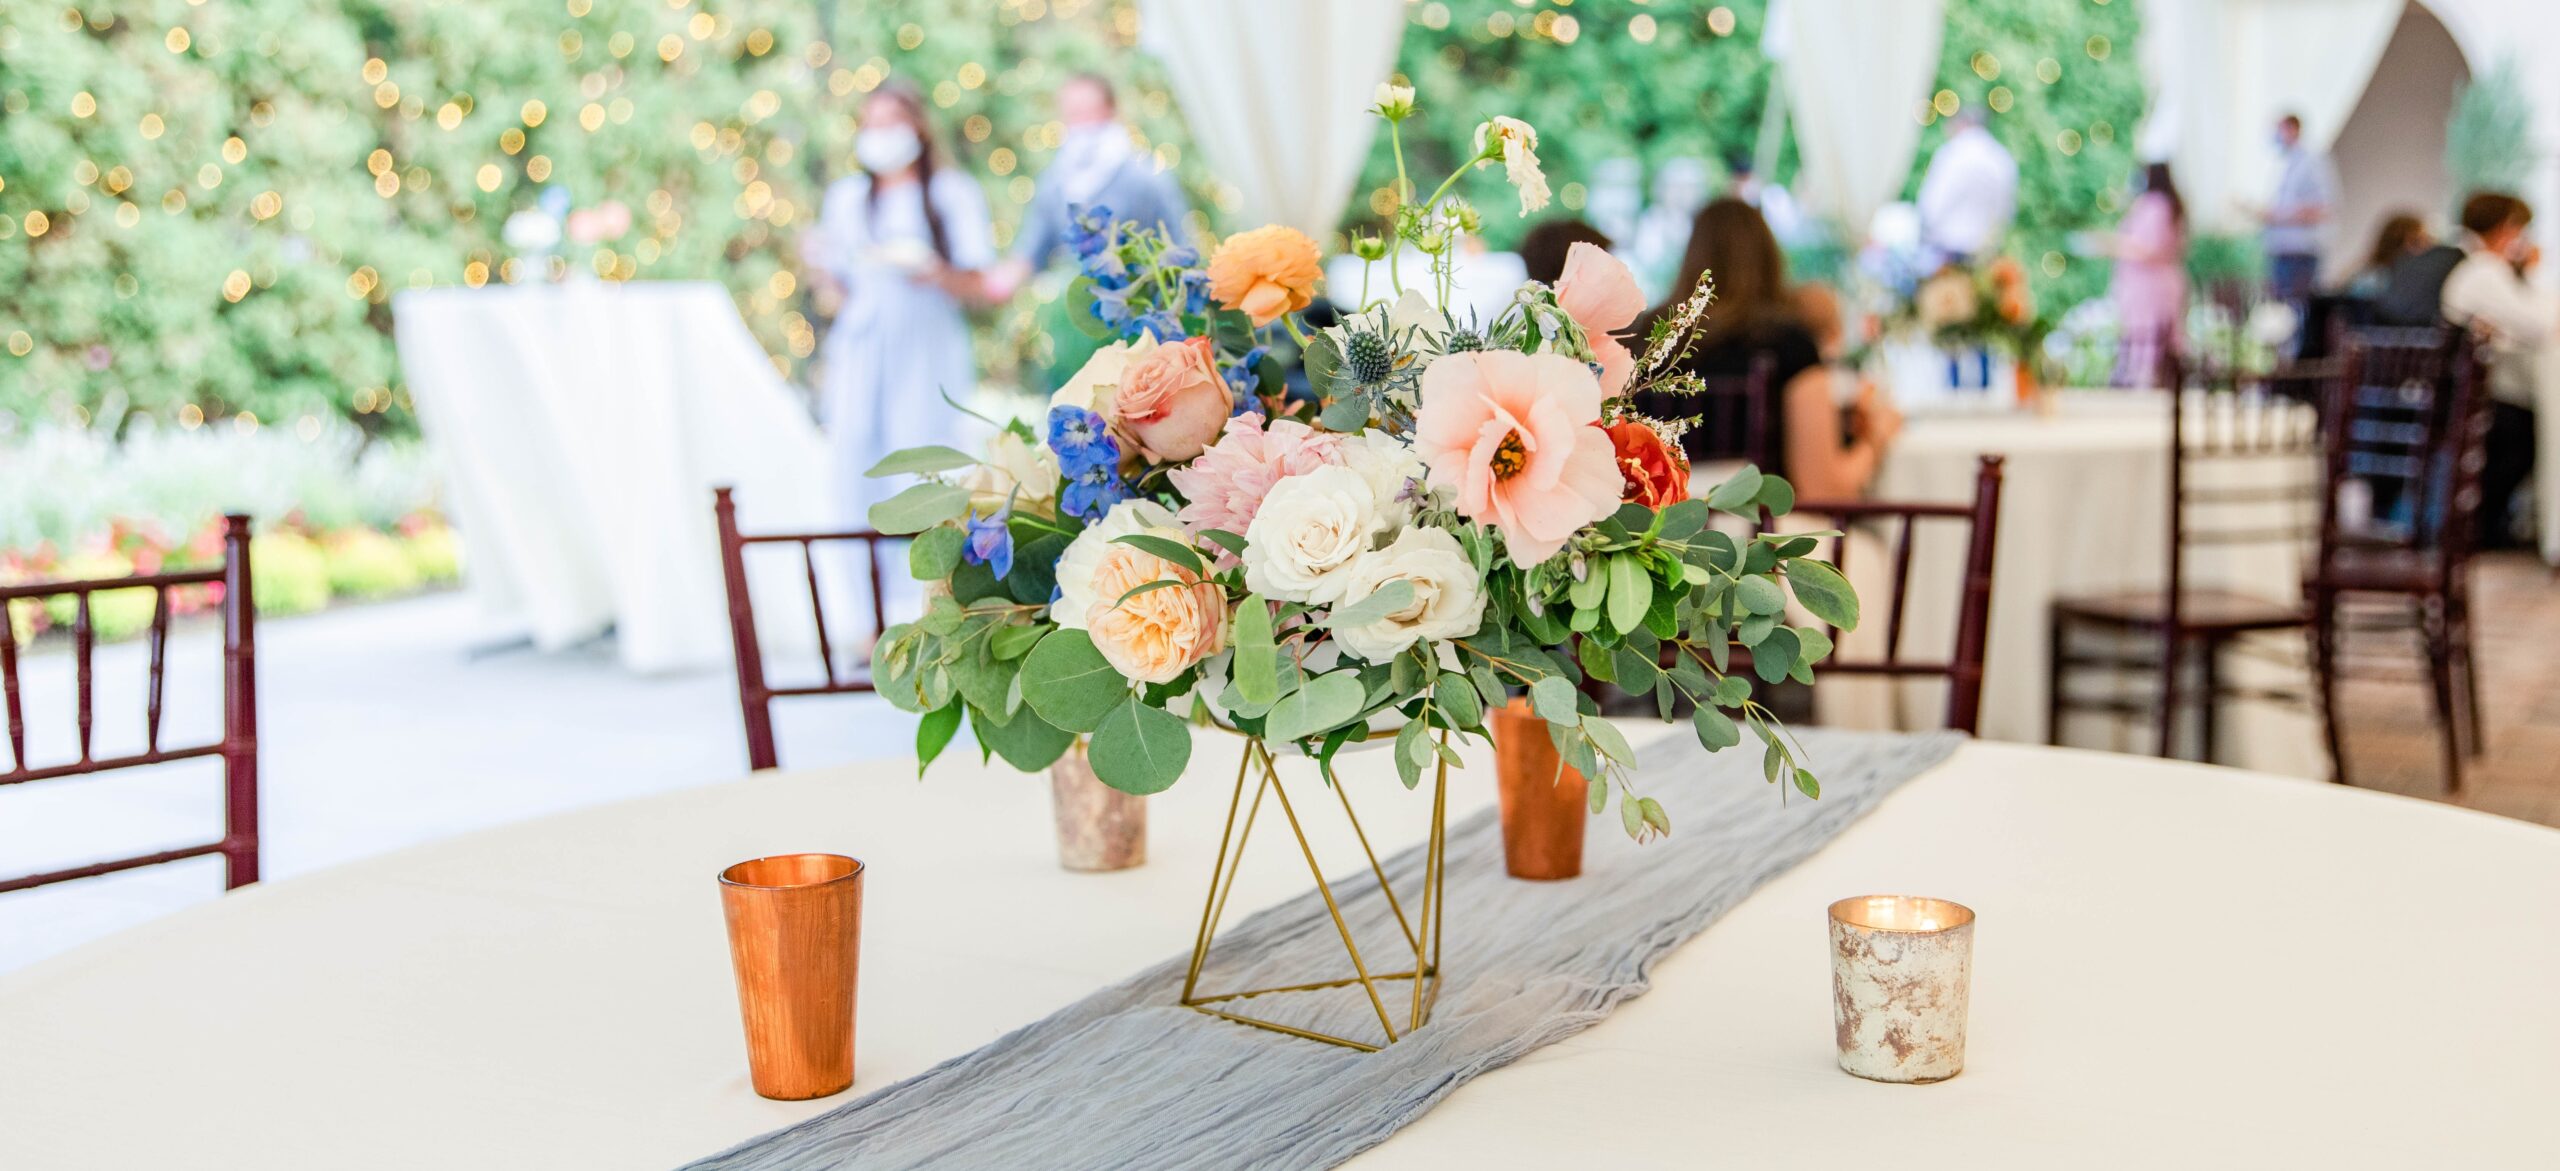 wedding reception details, geometric floral centerpiece